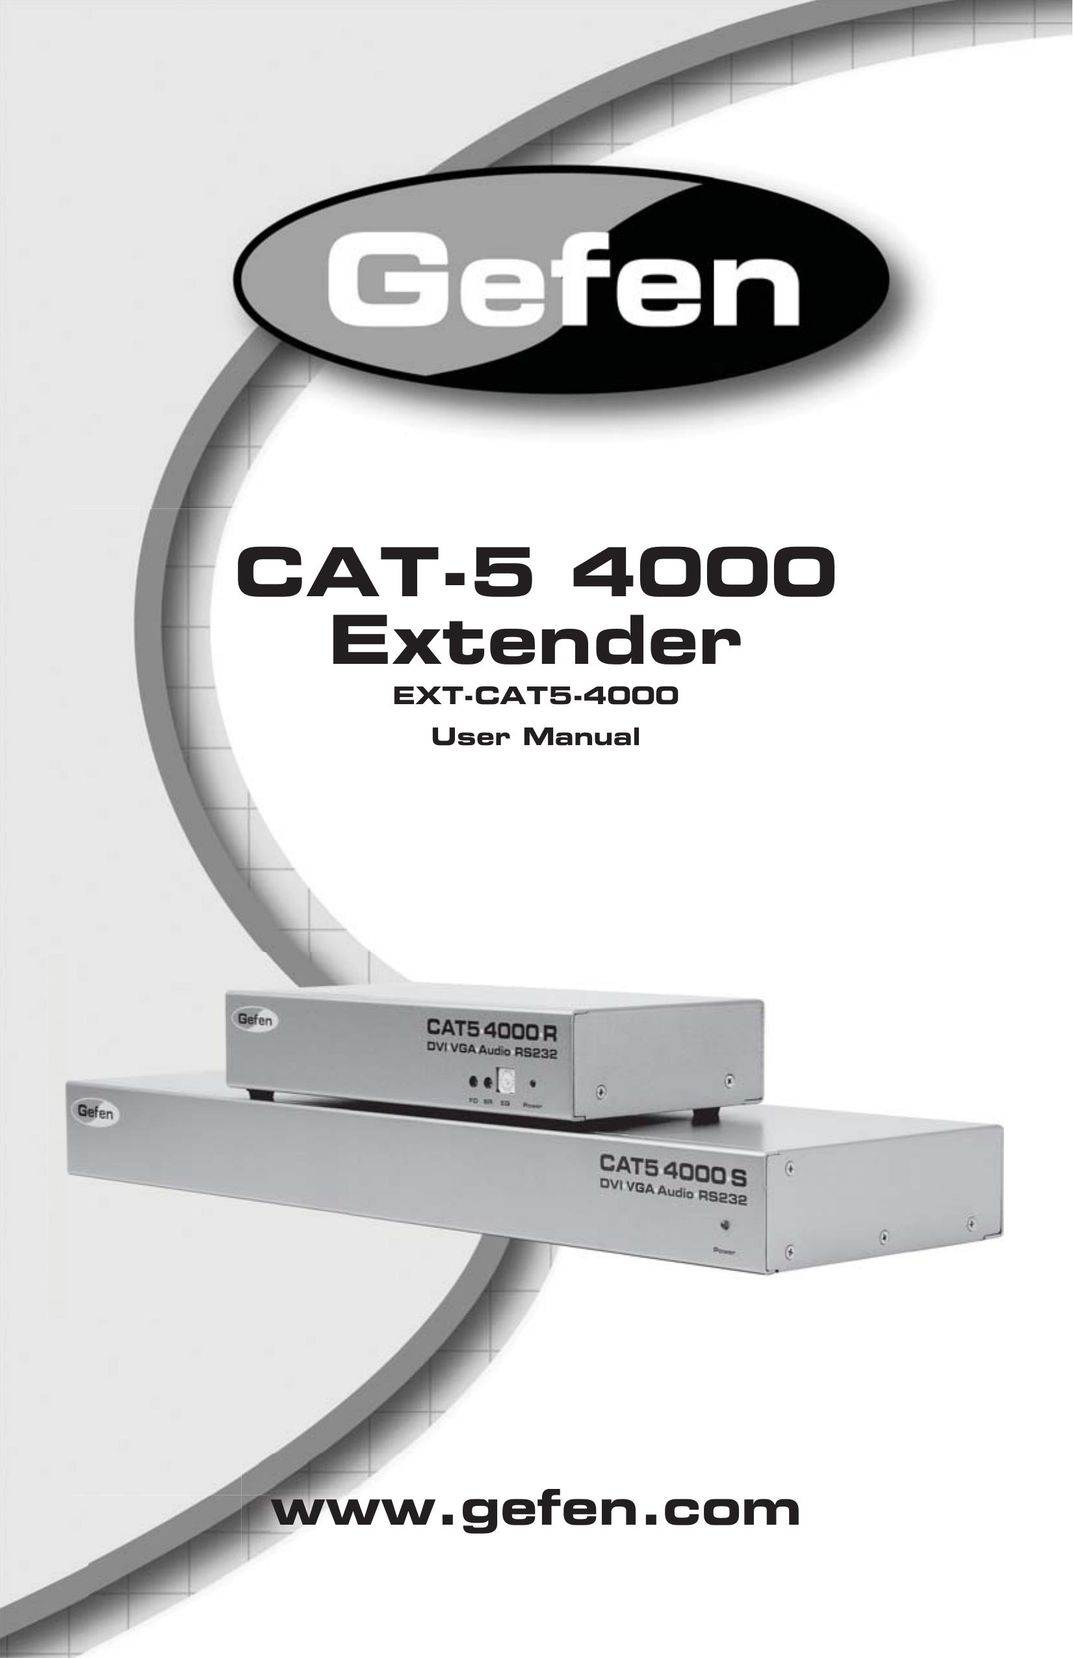 Gefen CAT-5 4000 Network Hardware User Manual